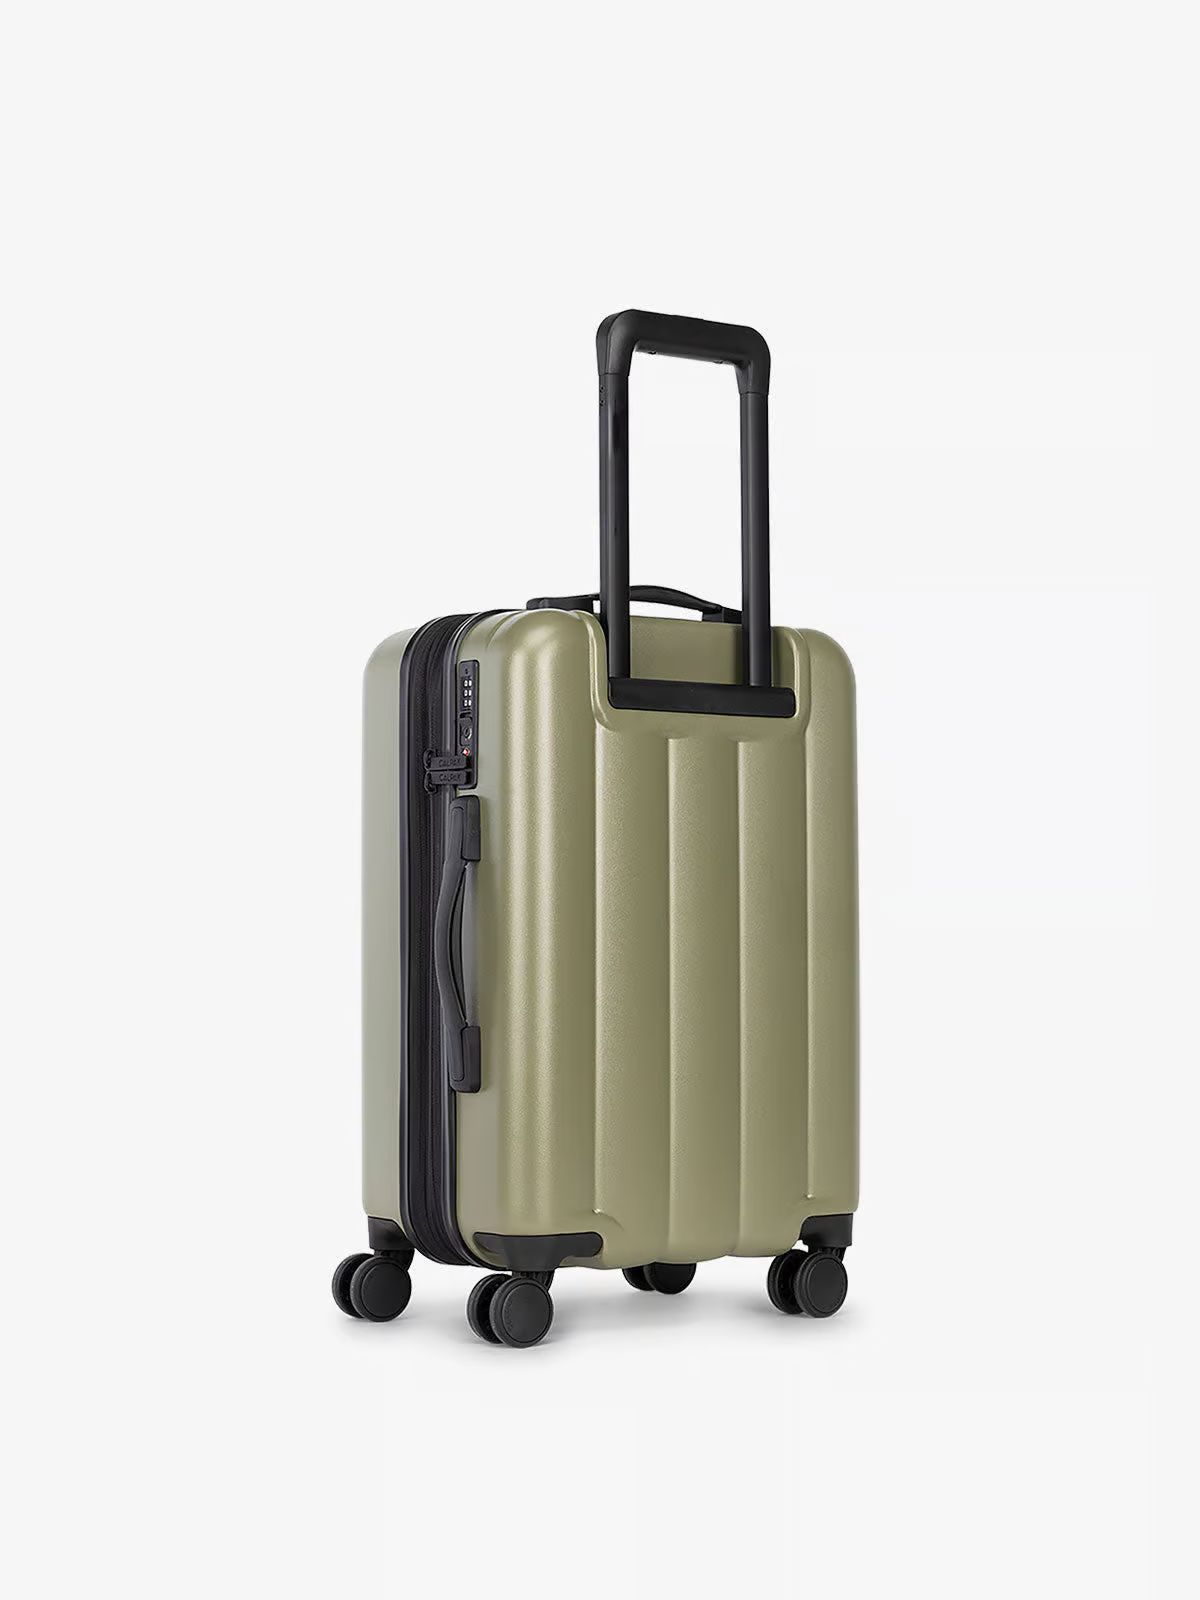 Evry Carry-On Luggage | CALPAK | CALPAK Travel